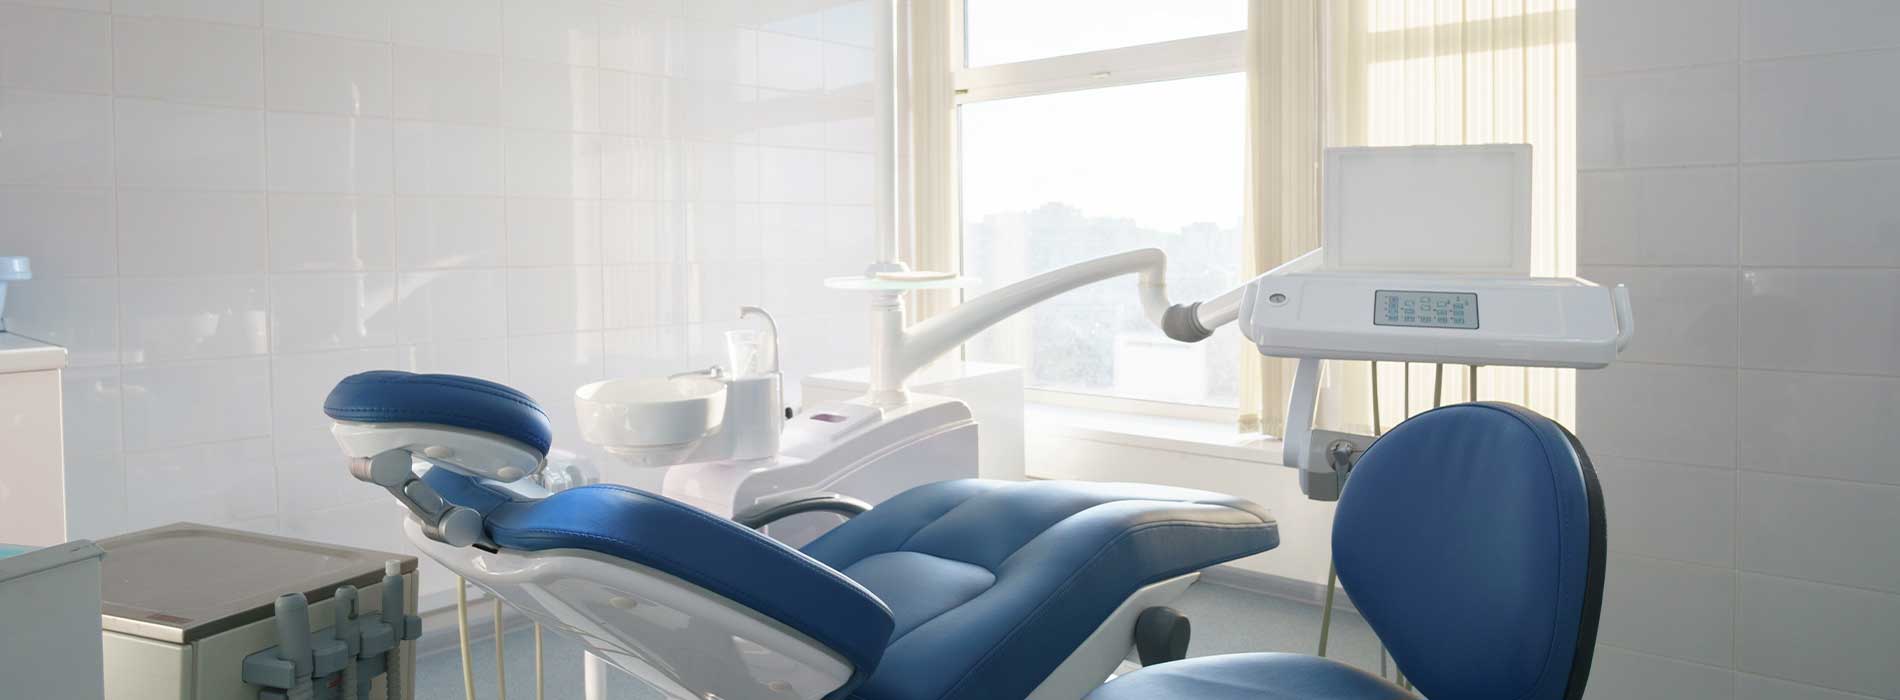 Steven E. Marek, DDS, LTD | Teeth Whitening, Oral Exams and Implant Dentistry